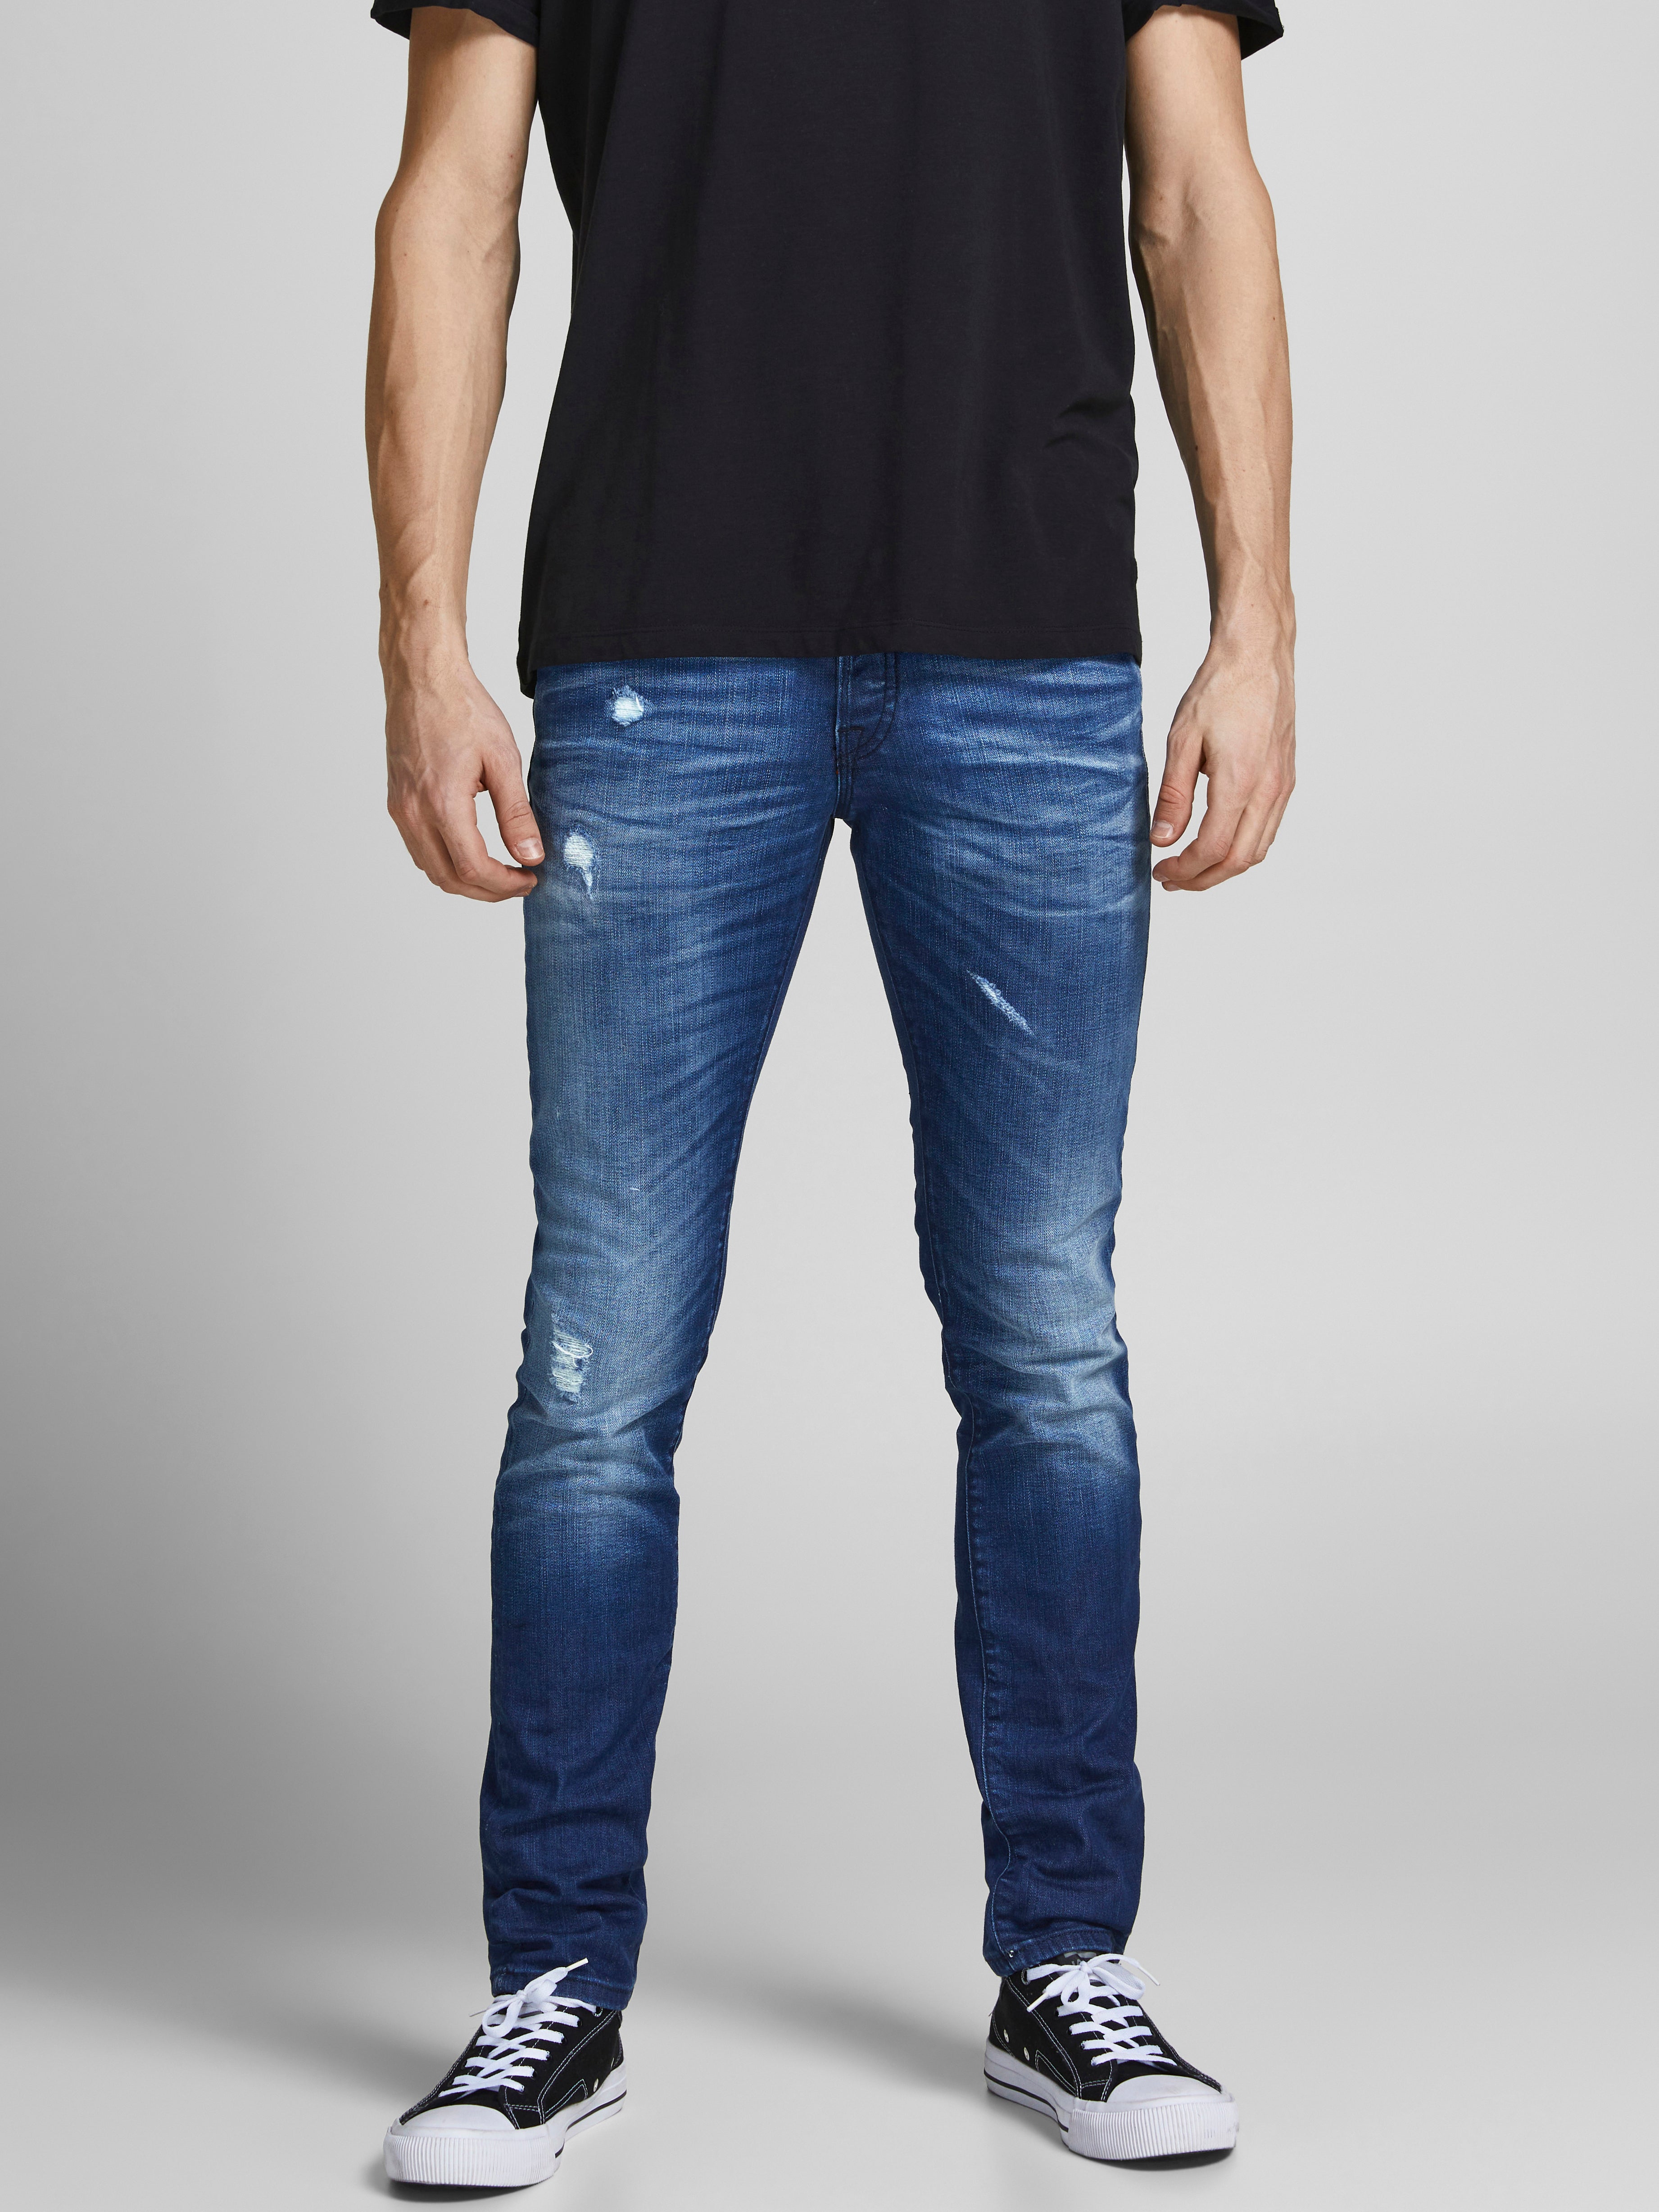 Blue 42                  EU discount 57% MEN FASHION Jeans Worn-in Jack & Jones Jeggings & Skinny & Slim 